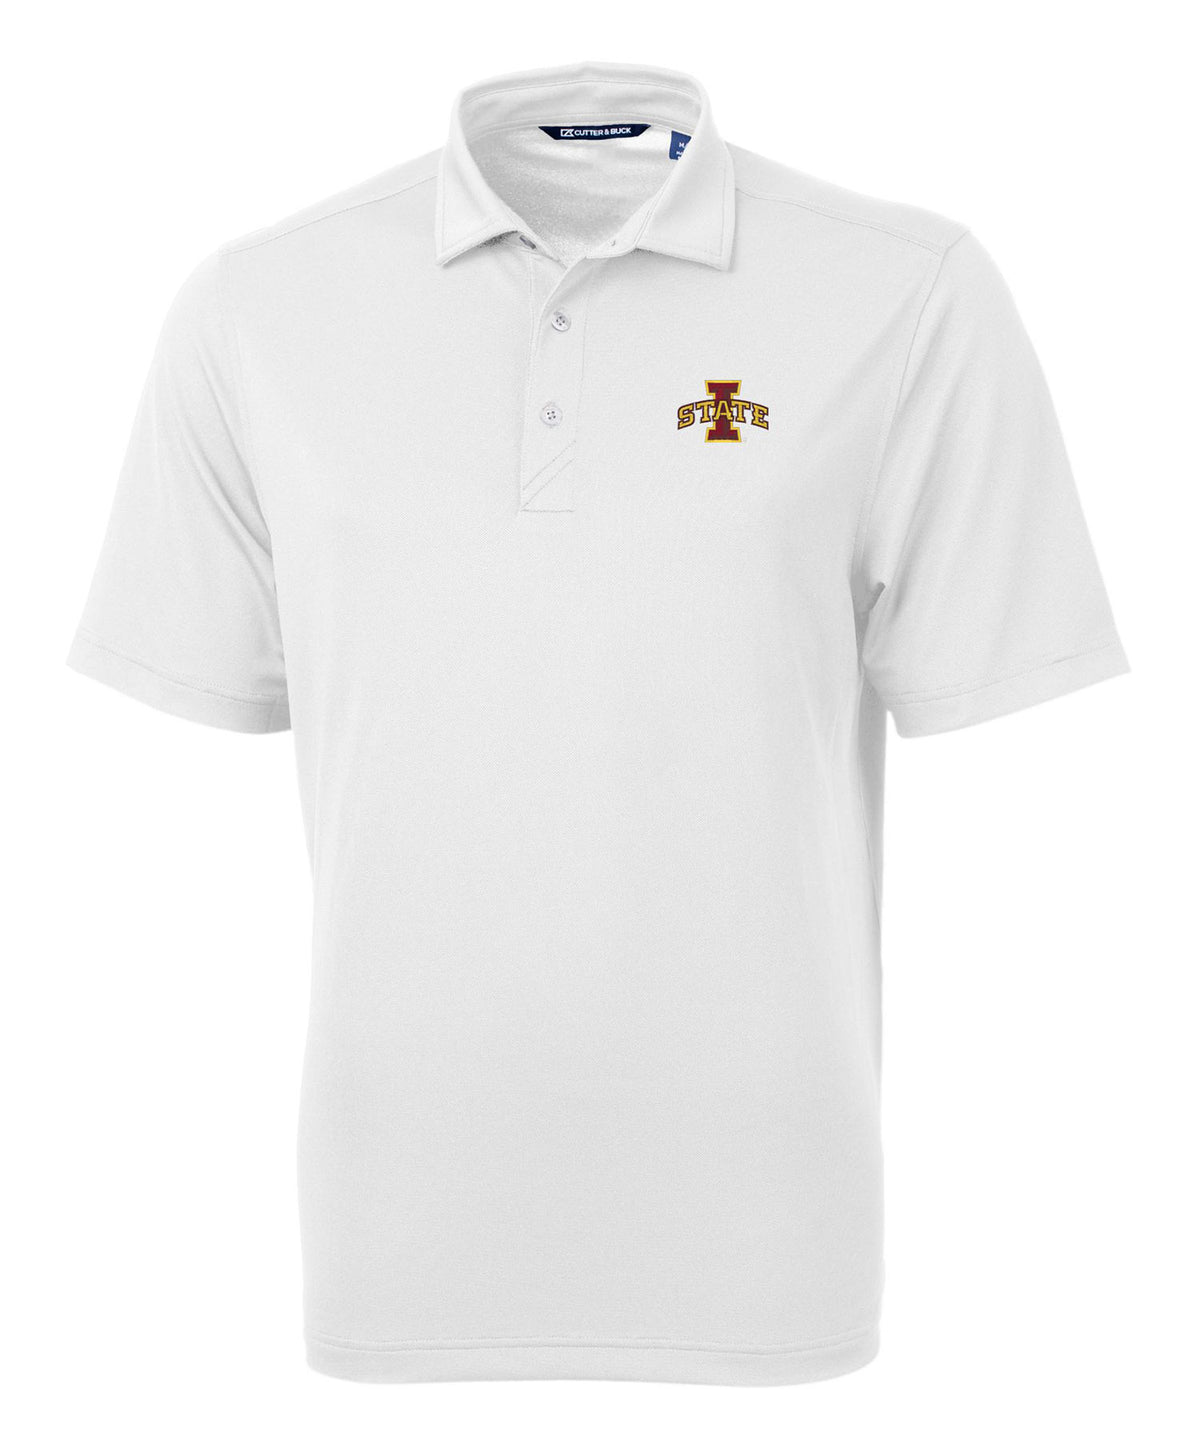 Cutter & Buck Iowa State University Cyclones Short Sleeve Polo Knit Shirt, Men's Big & Tall